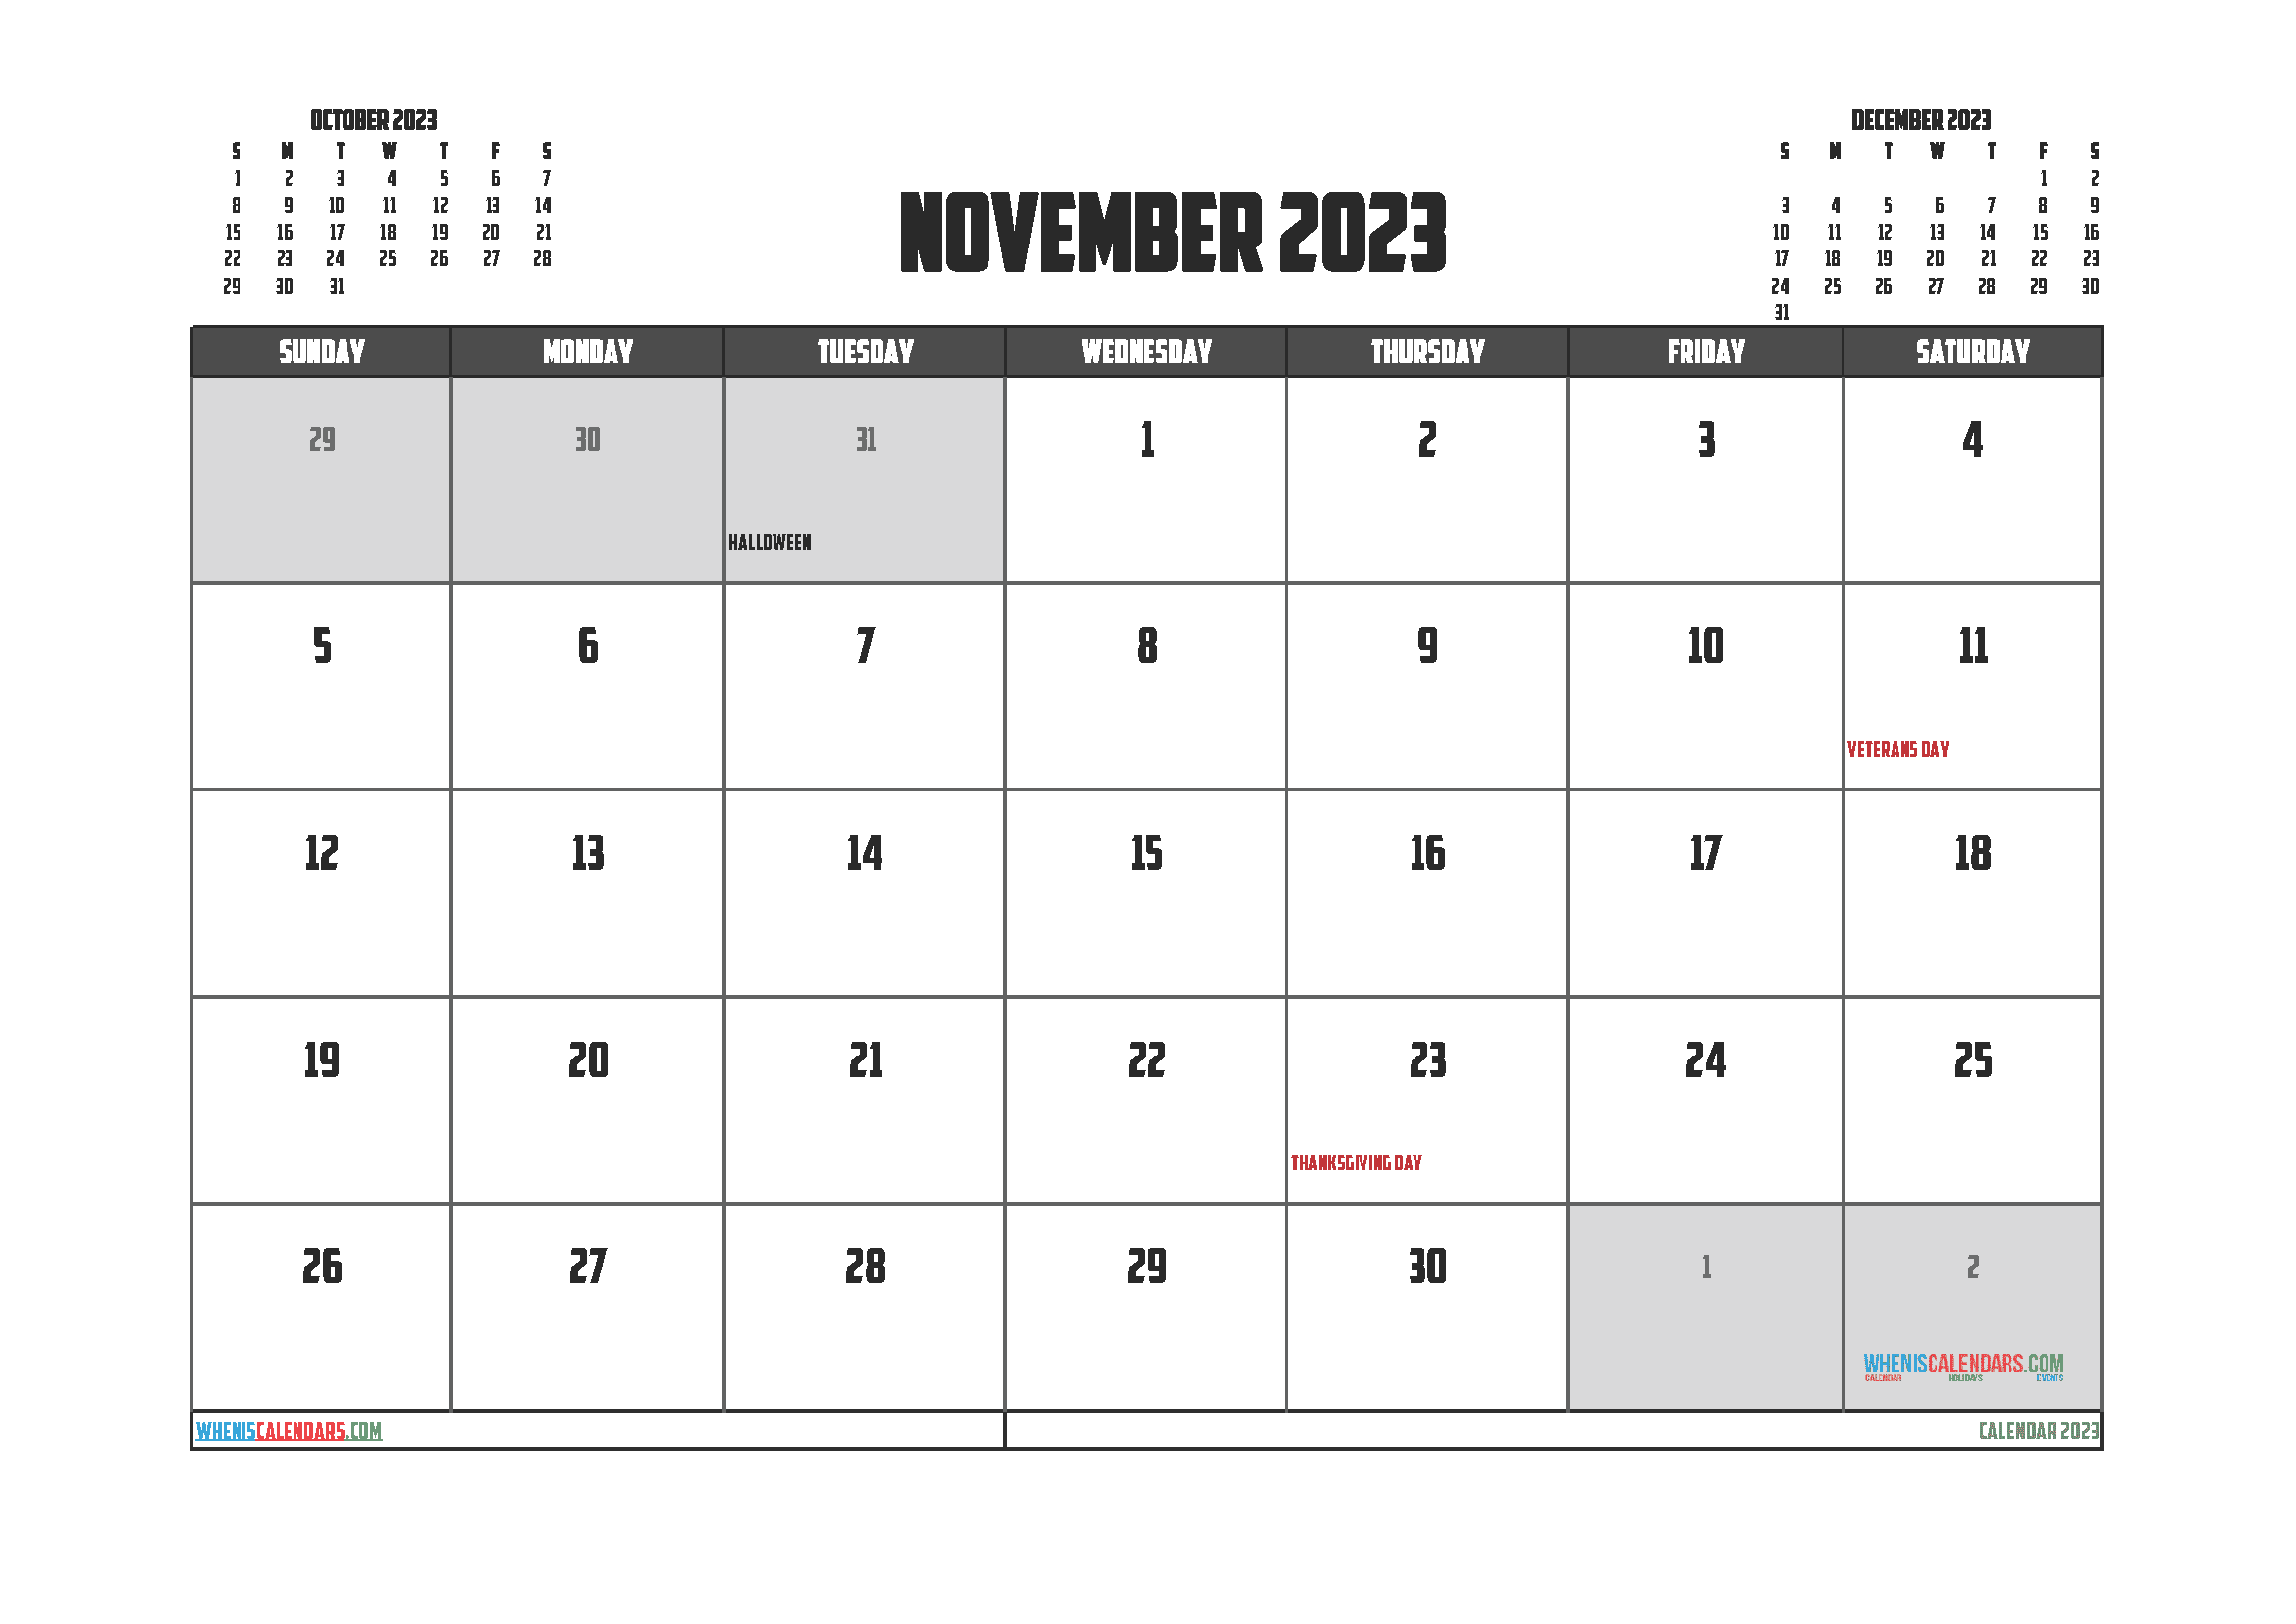 Free Calendar 2023 November with Holidays PDF in Landscape